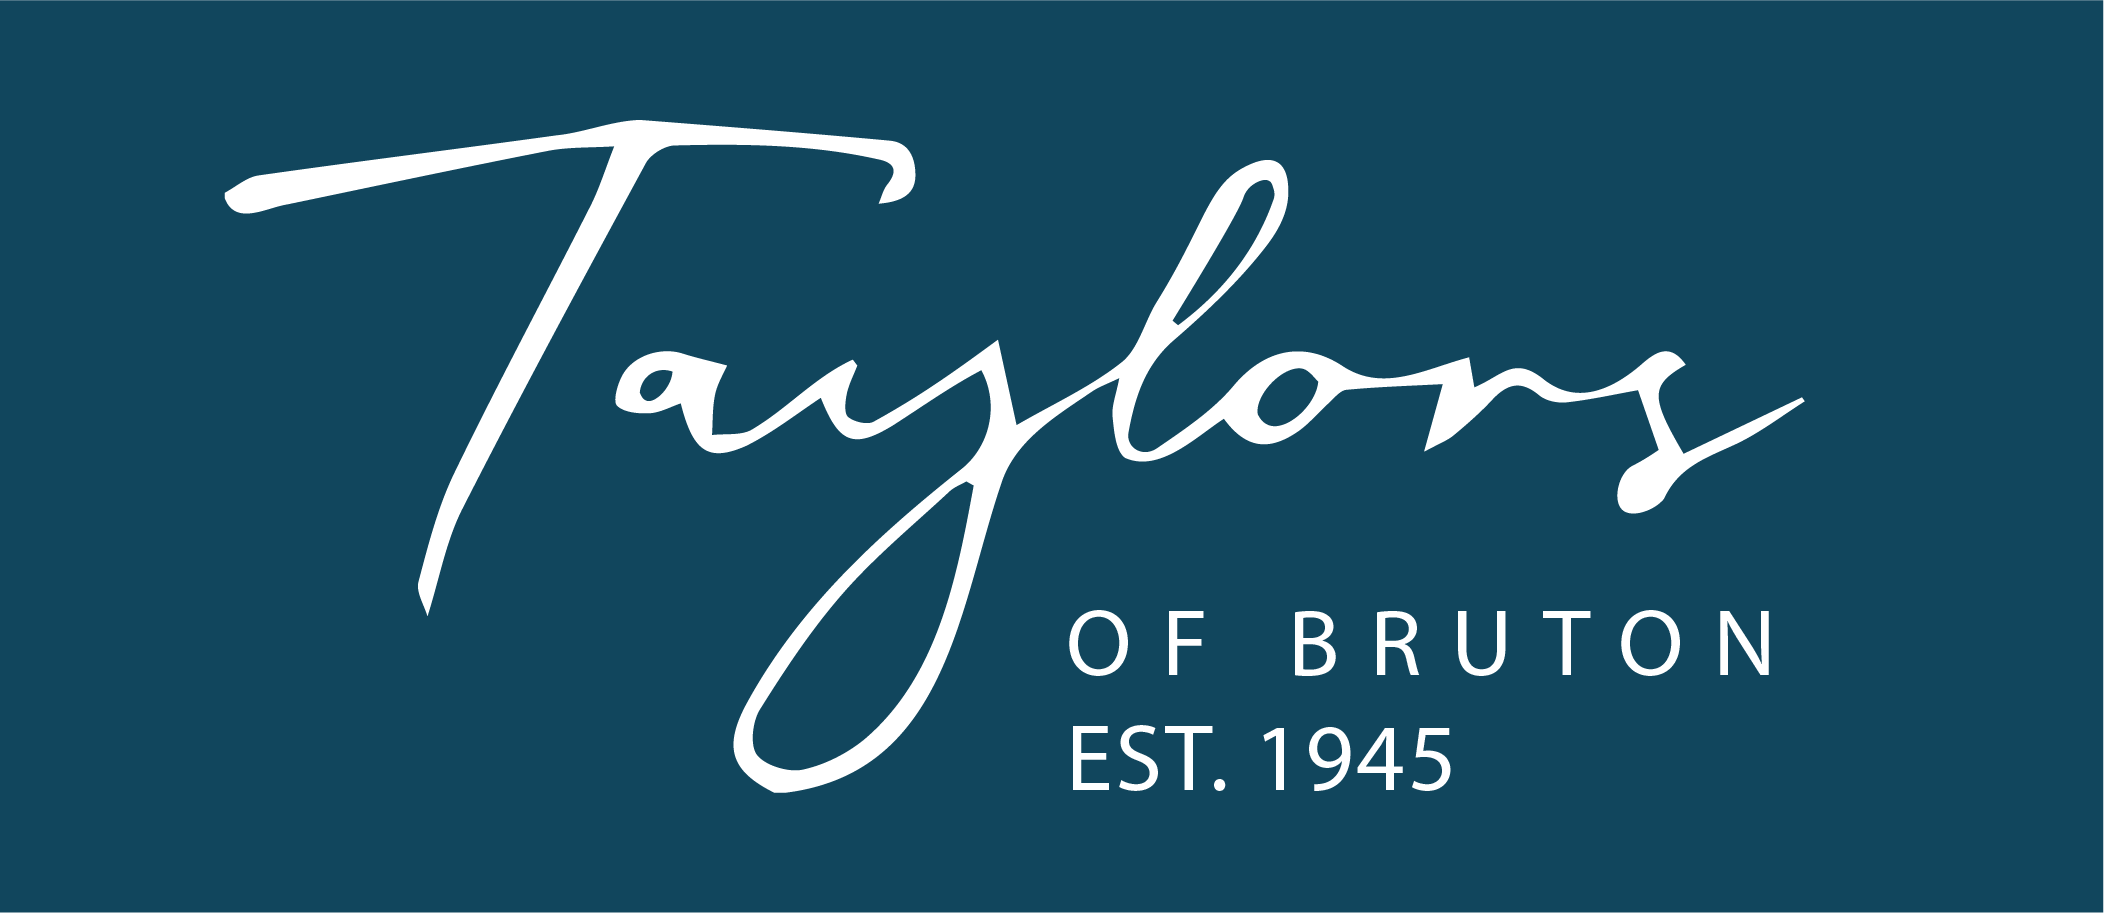 Taylors of Bruton Bakery